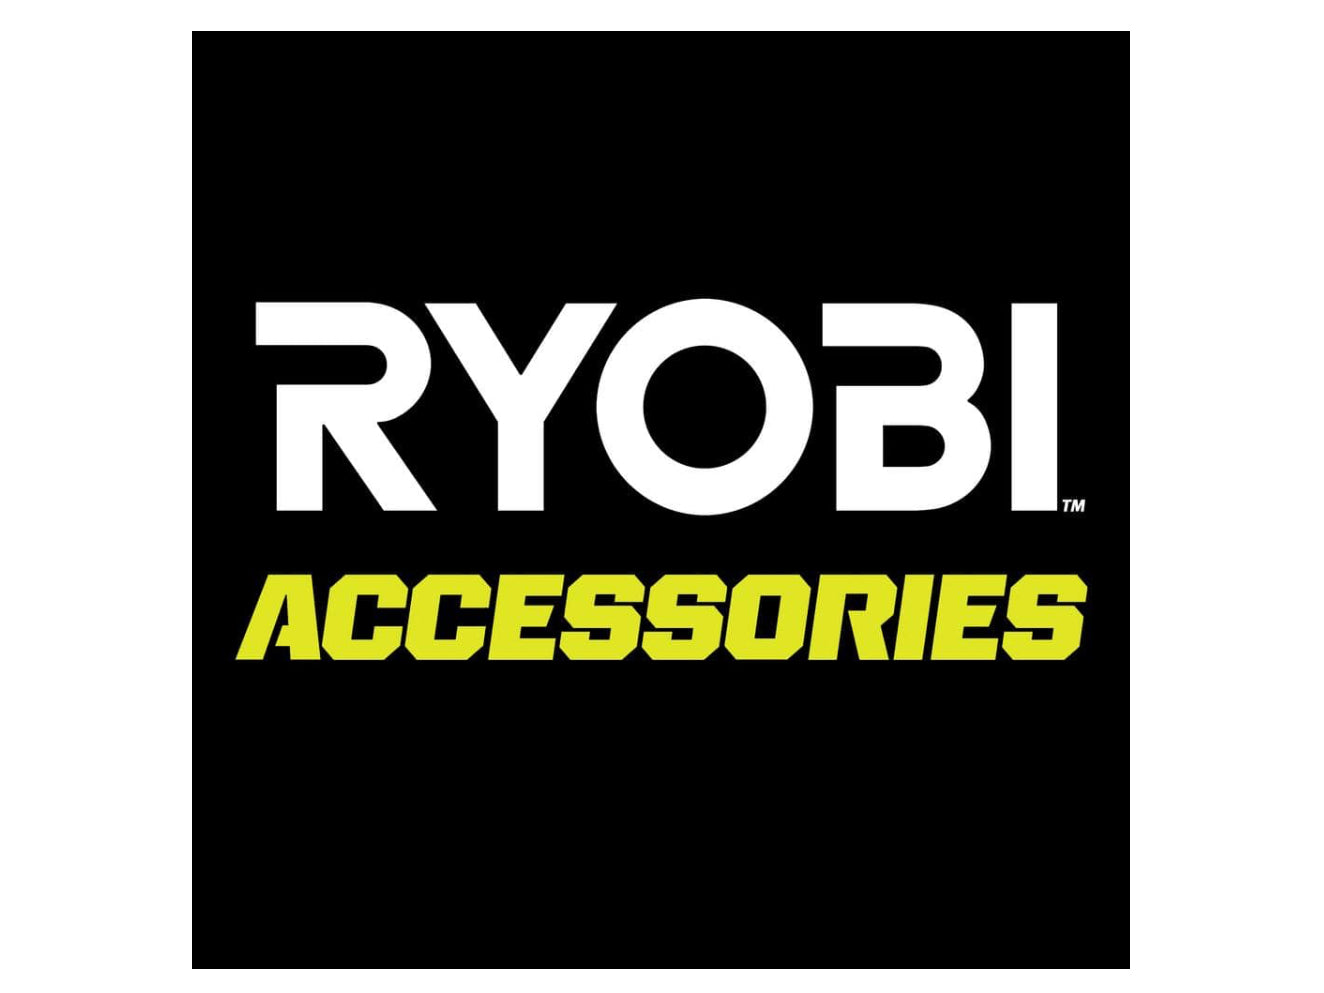 RYOBI Rotary Tool 120-Piece All-Purpose Kit (For Wood, Metal and Plastic)